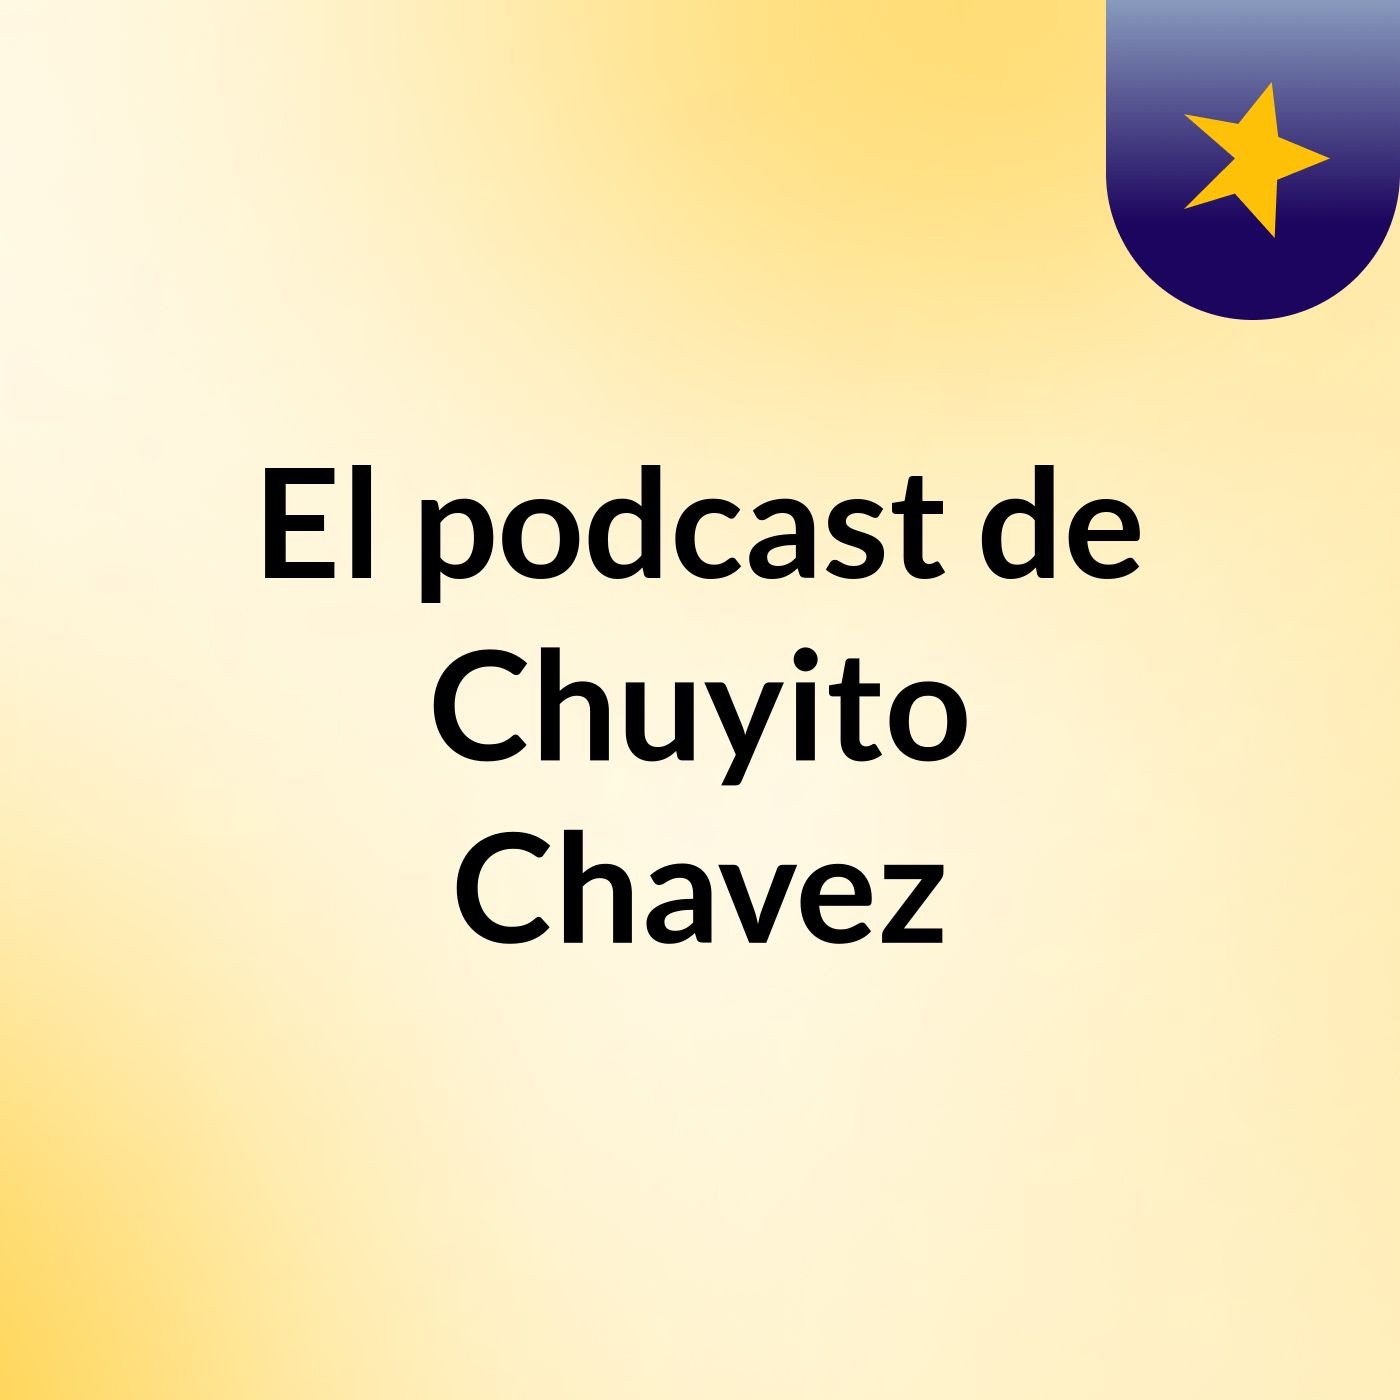 El podcast de Chuyito Chavez